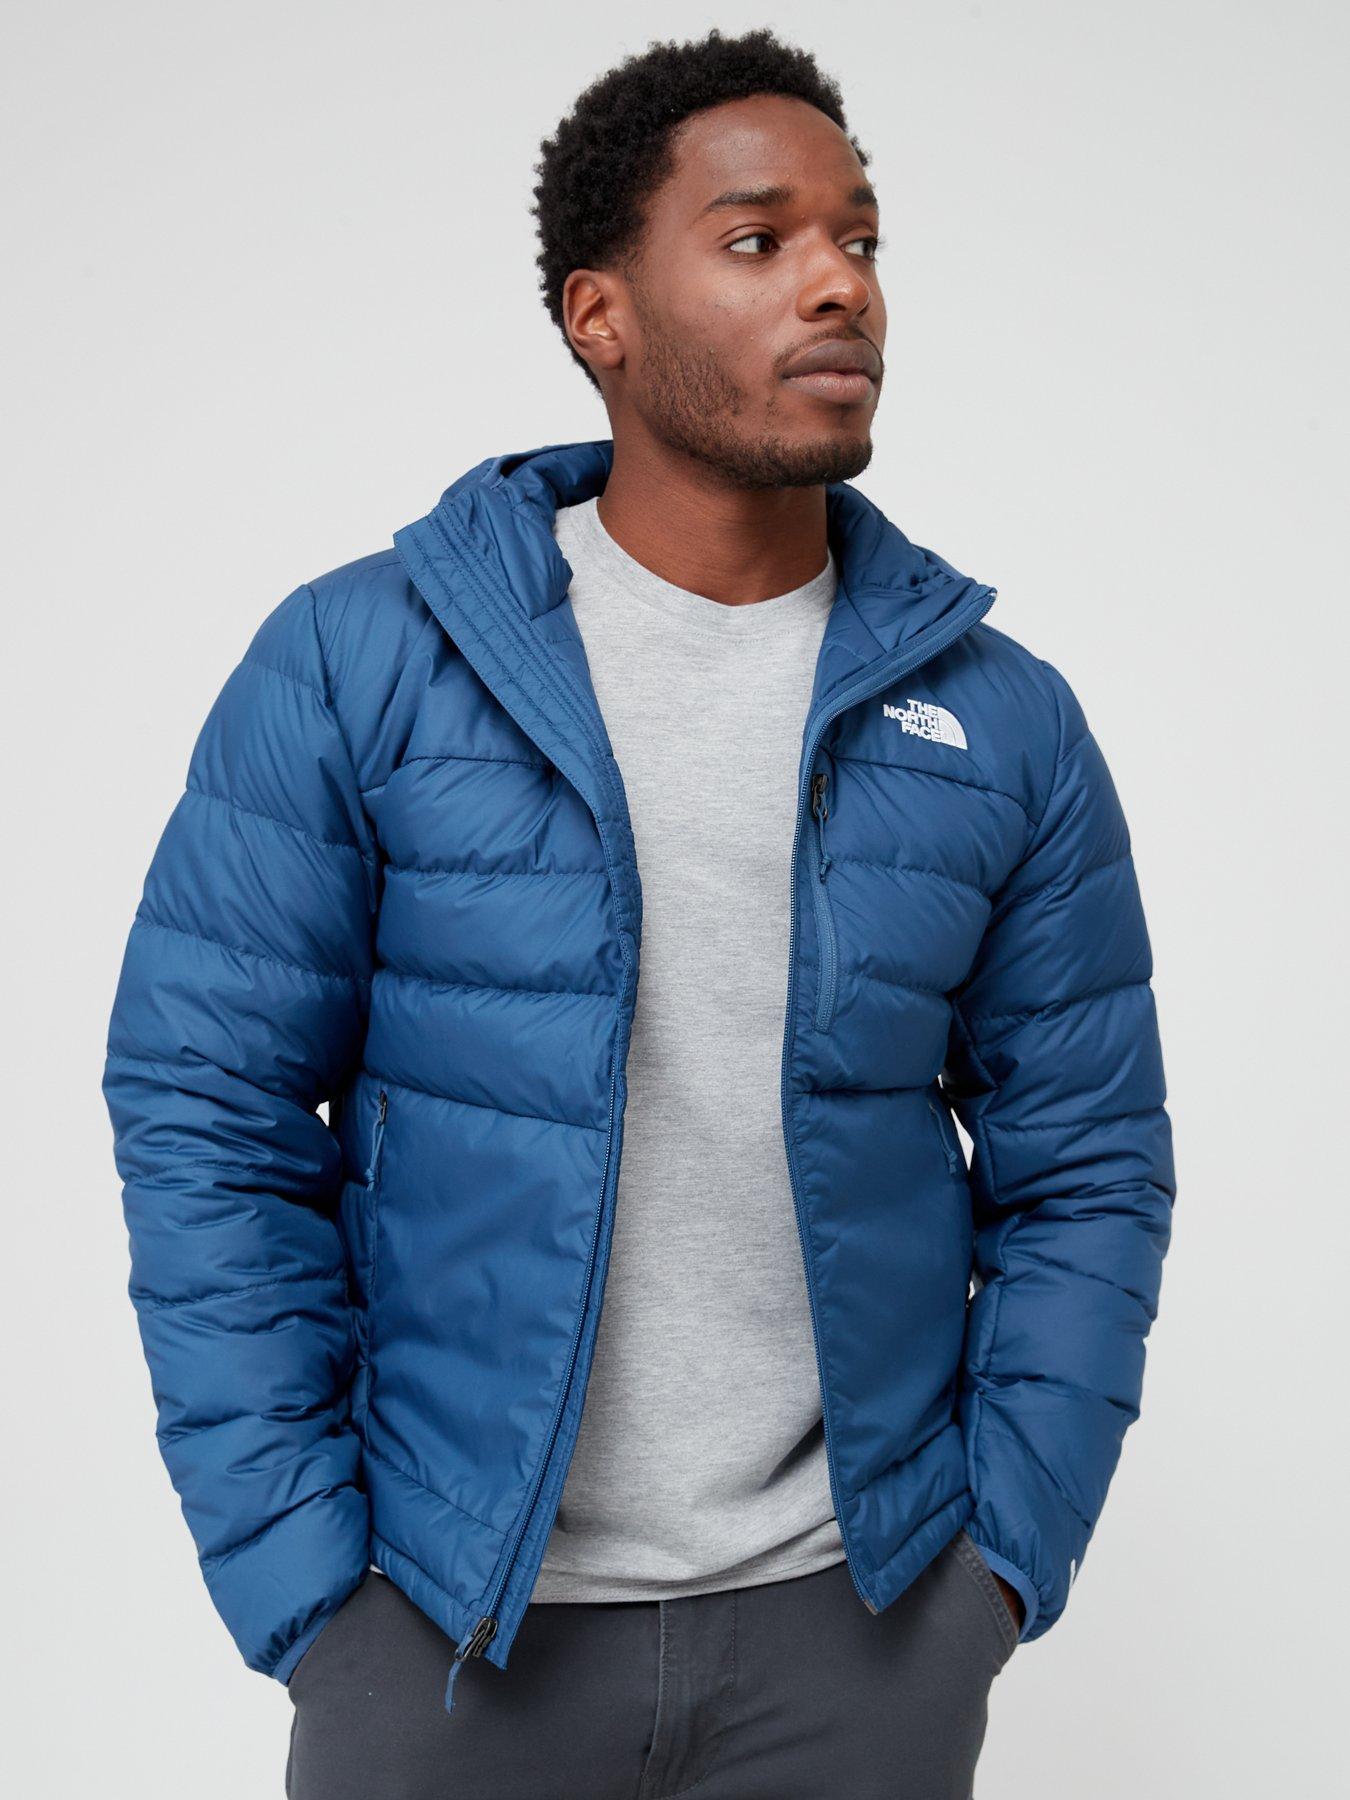 Navy Blue/Gray/Blue M MEN FASHION Jackets Sports discount 73% Springfield light jacket 